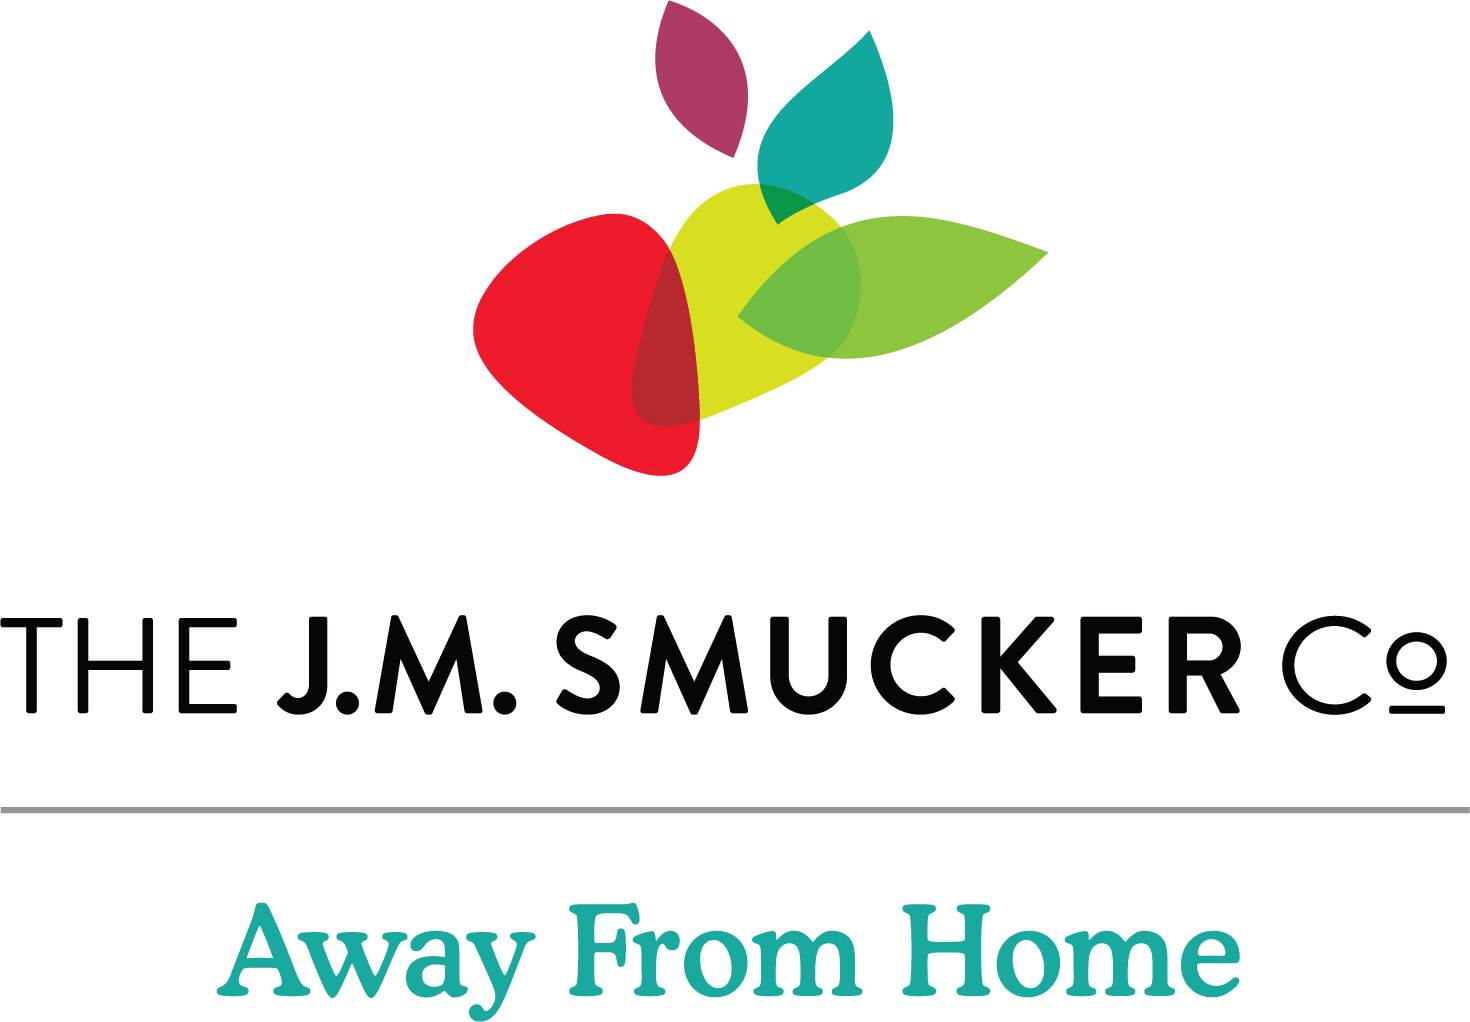 The J.M. Smucker Co. logo